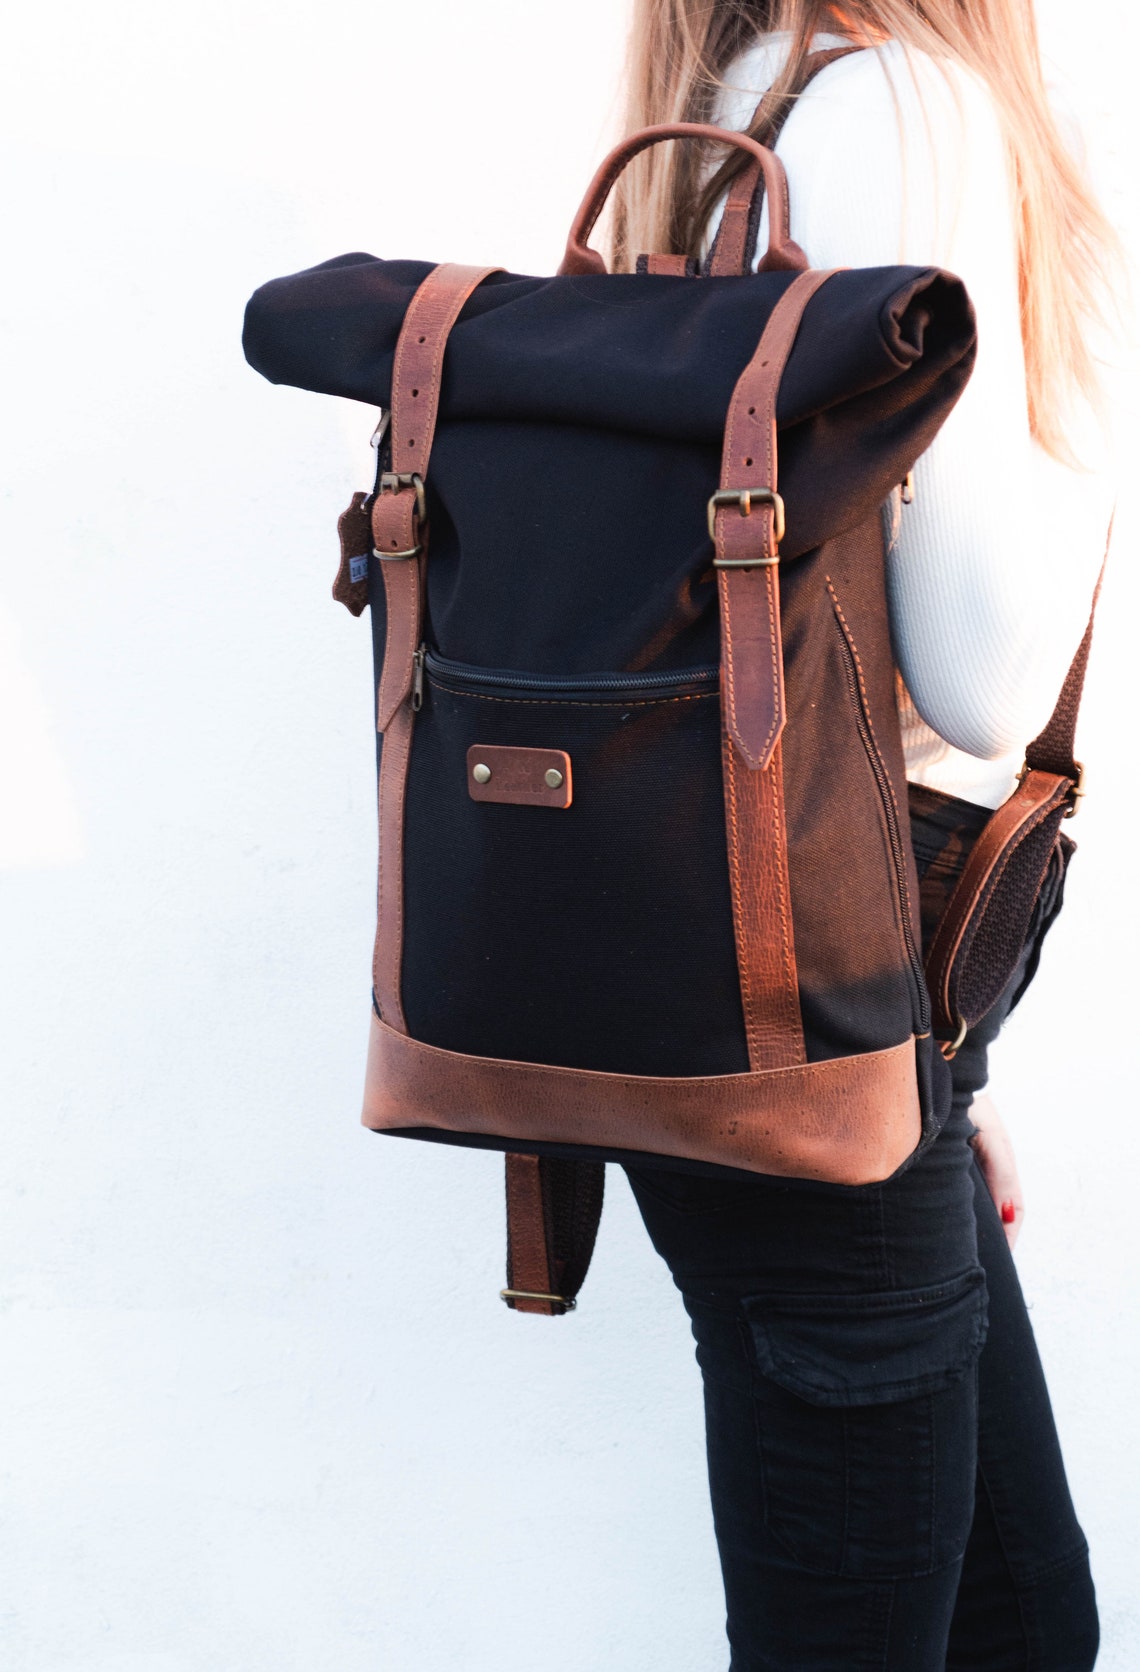 Unisex rucksack Traveller black laptop bag urban | Etsy